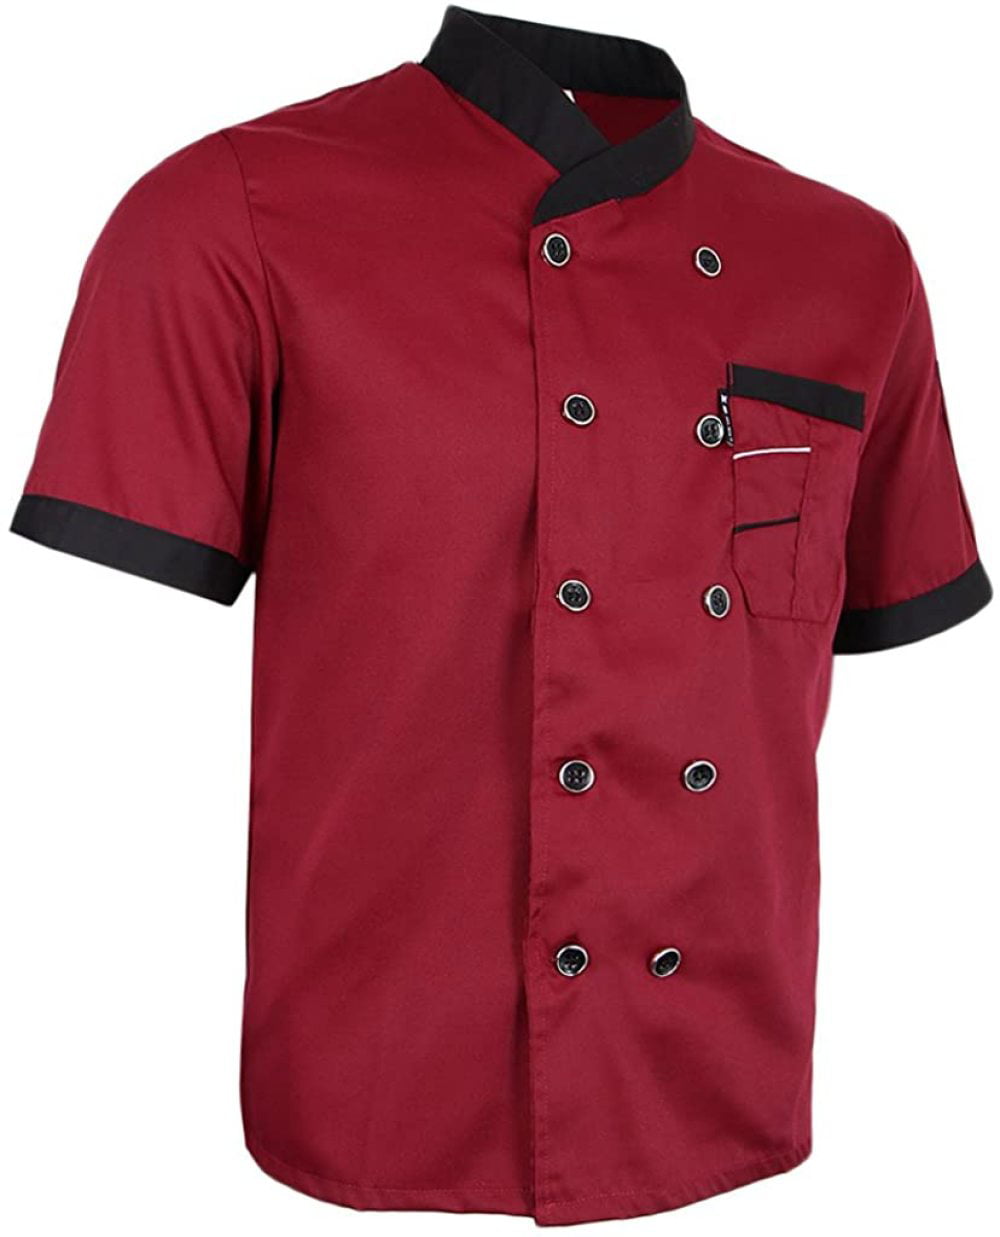 Summer Durable Chef Jacket Coat Service Bakery Uniform Short Sleeve Chefwear 